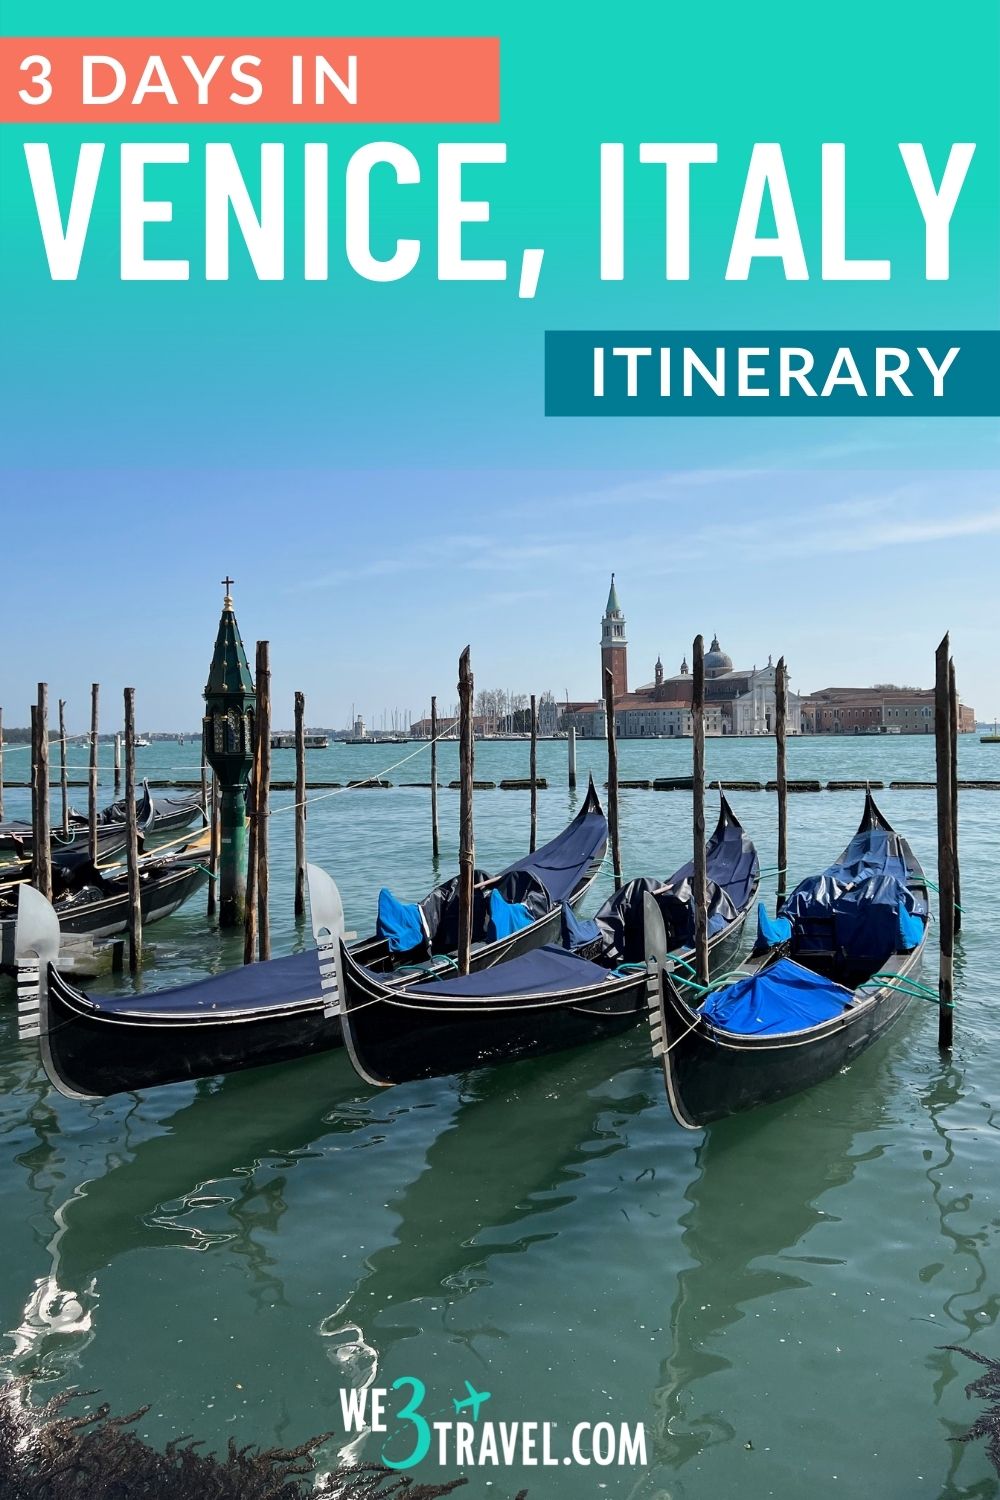 3 Days in Venice Italy itinerary